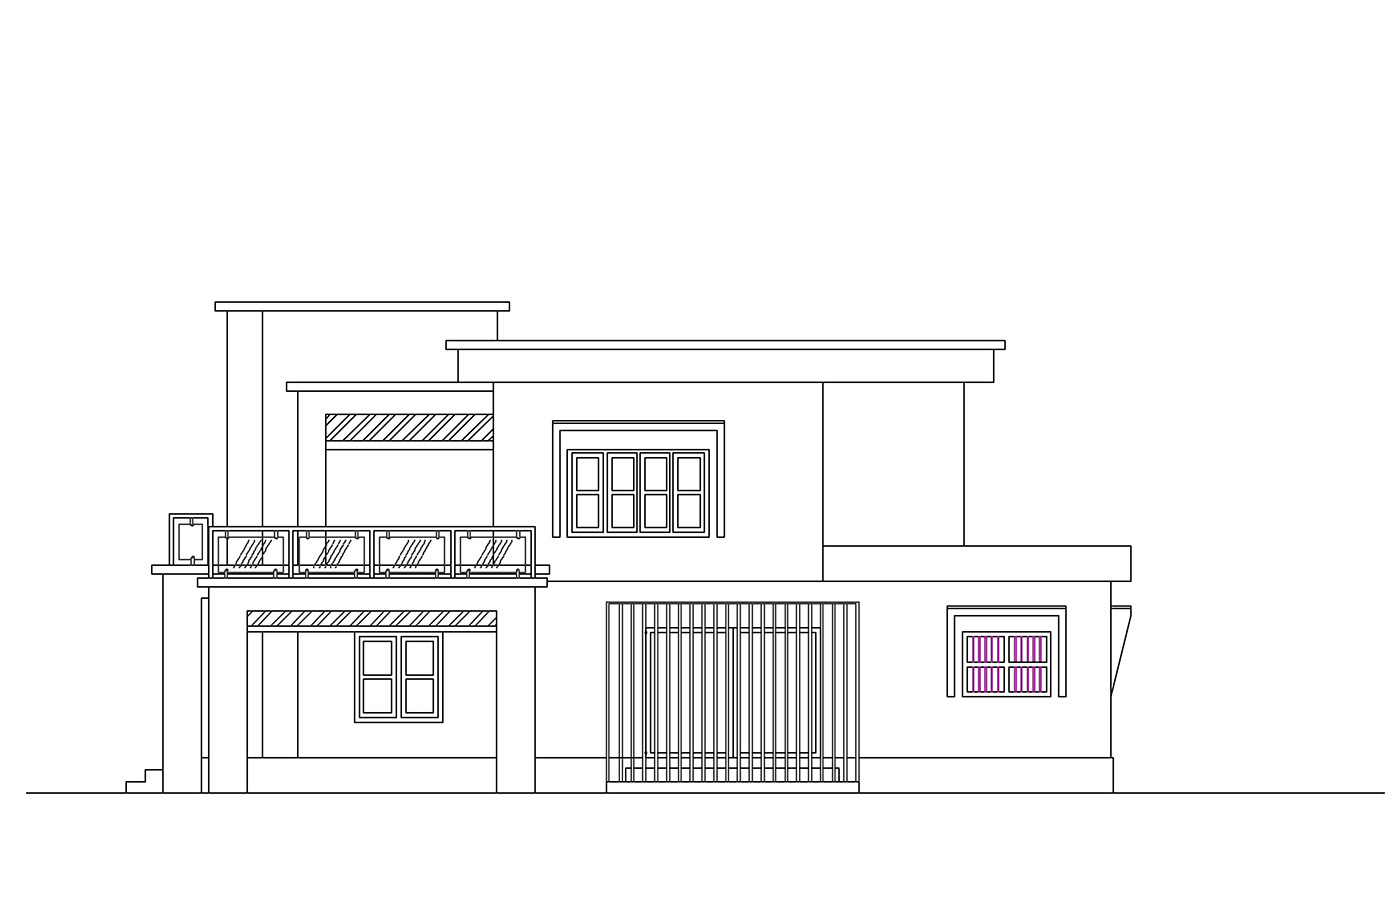 draftsman floor plan Elevation Section drawing architectural design single villa